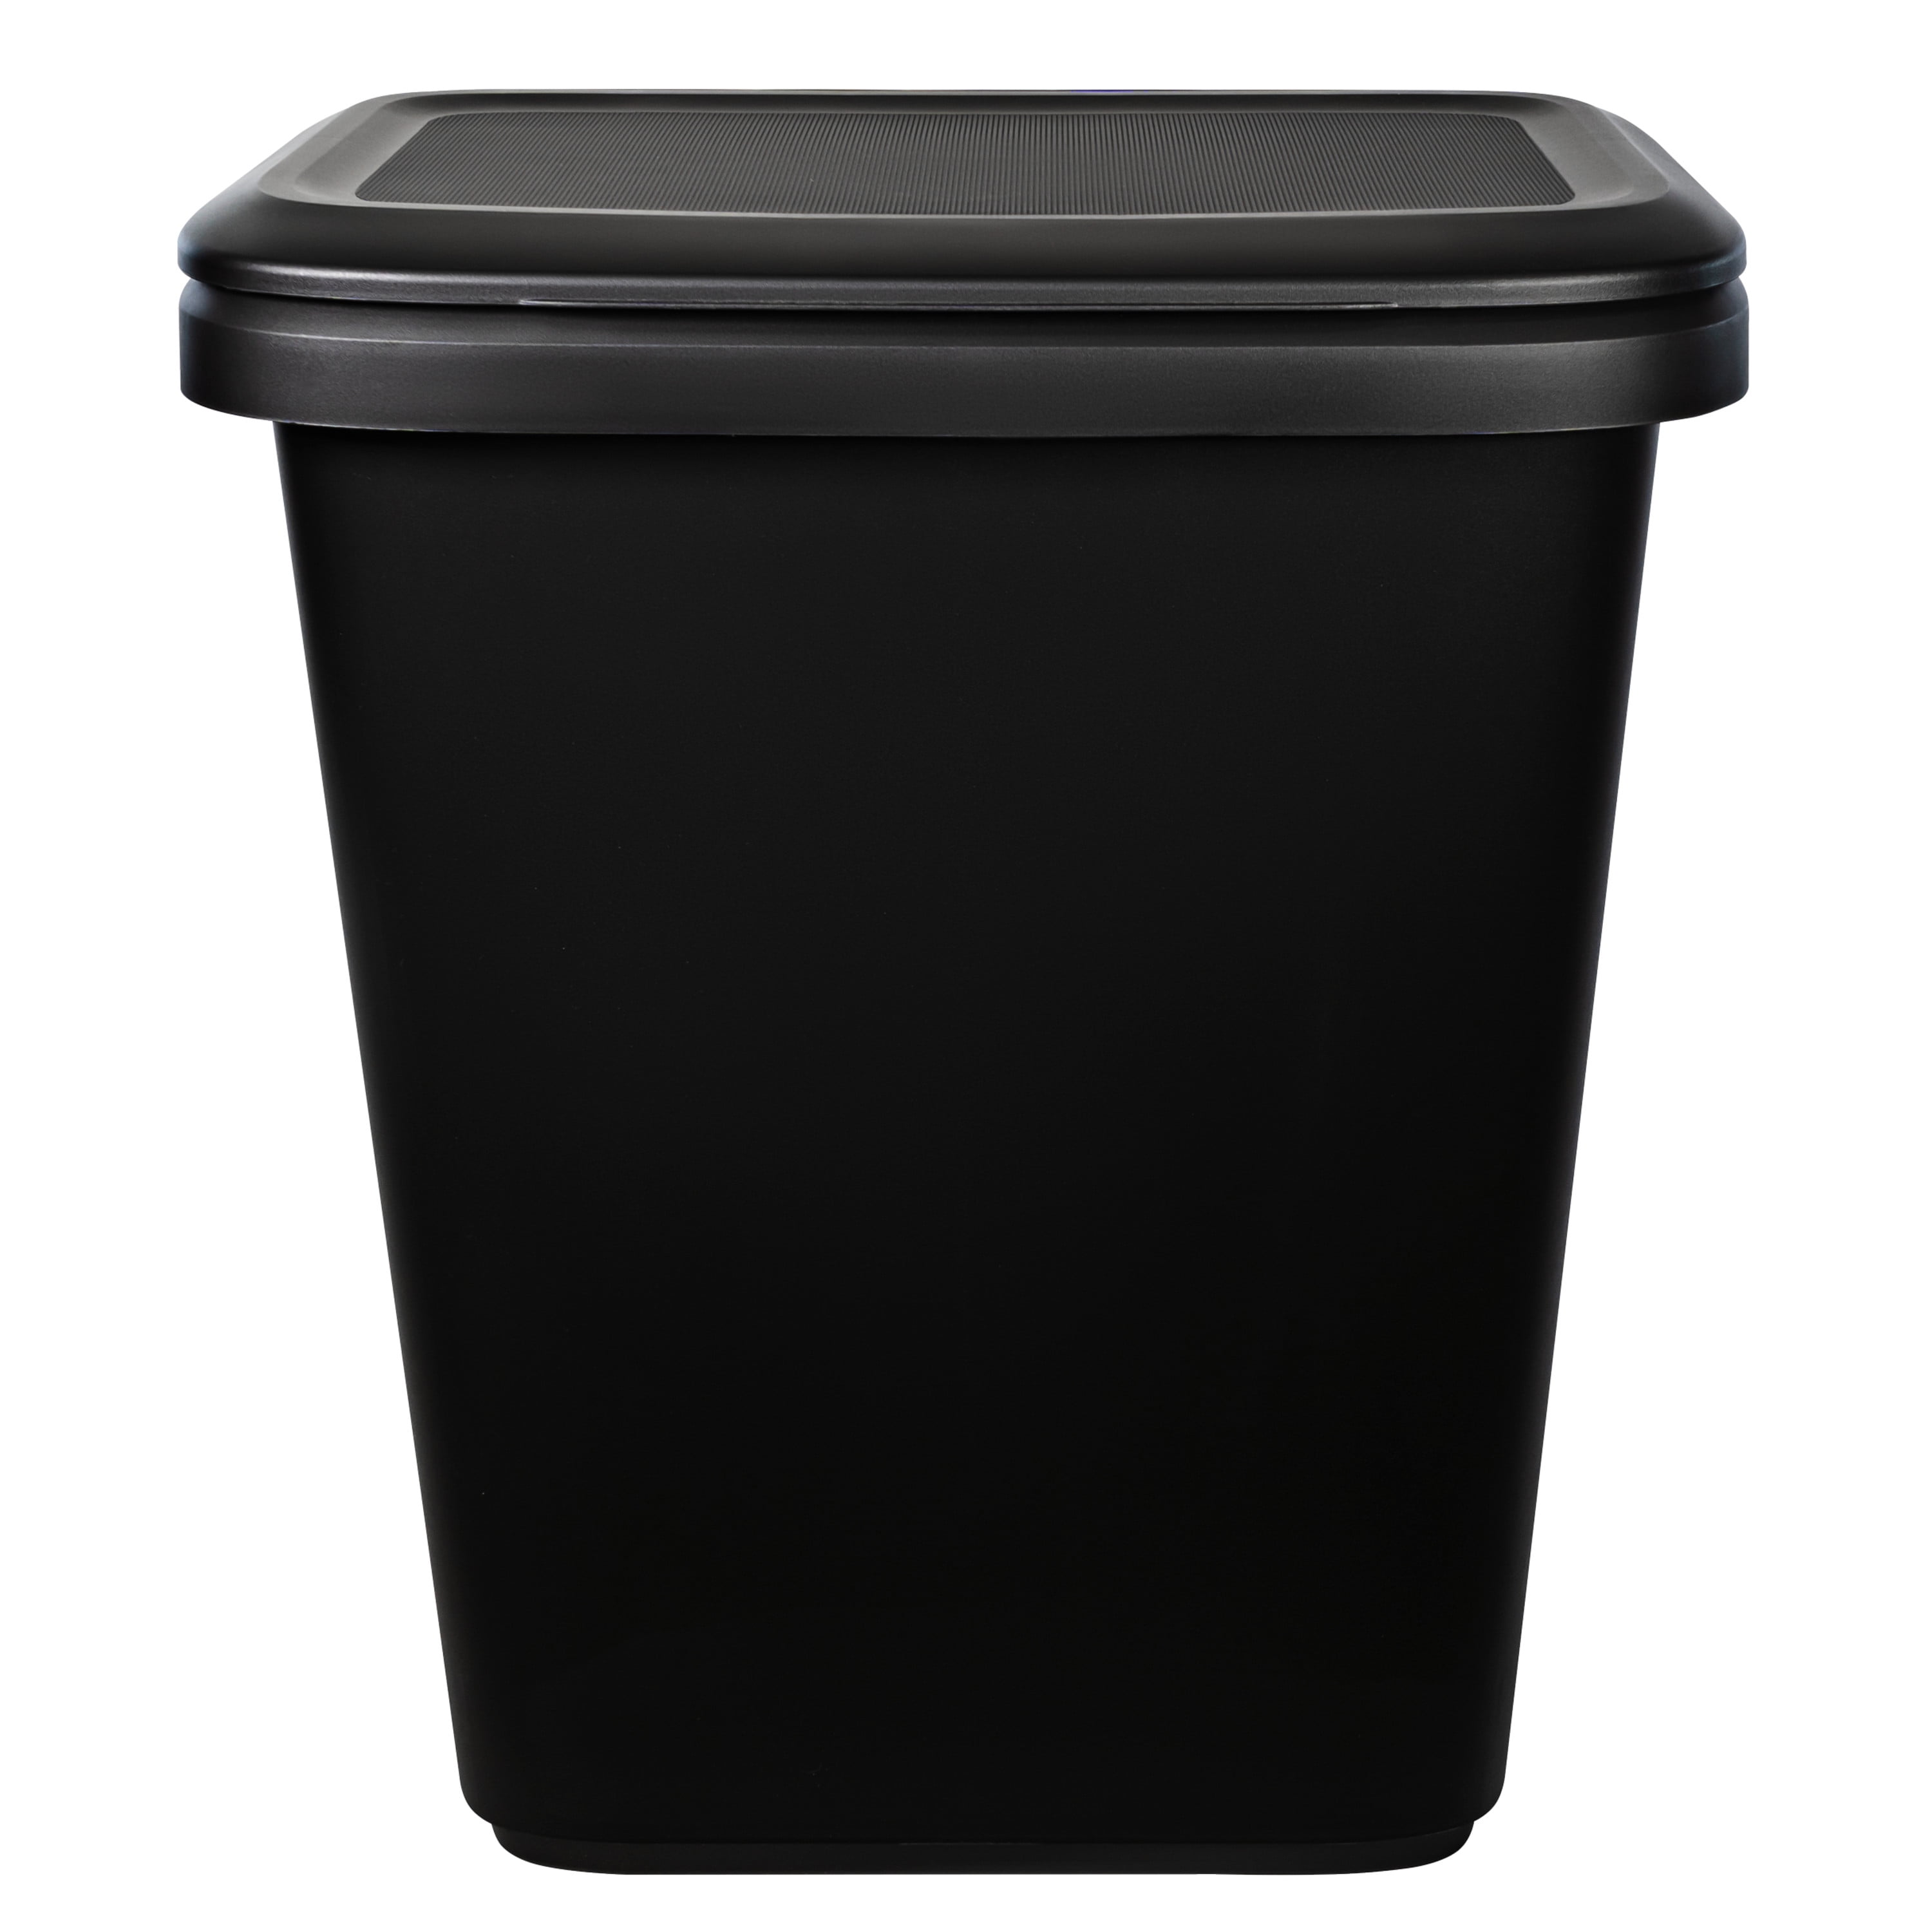 Small Plastic Trash Can Black & 4-Gallon Clear Bin Liners Combo